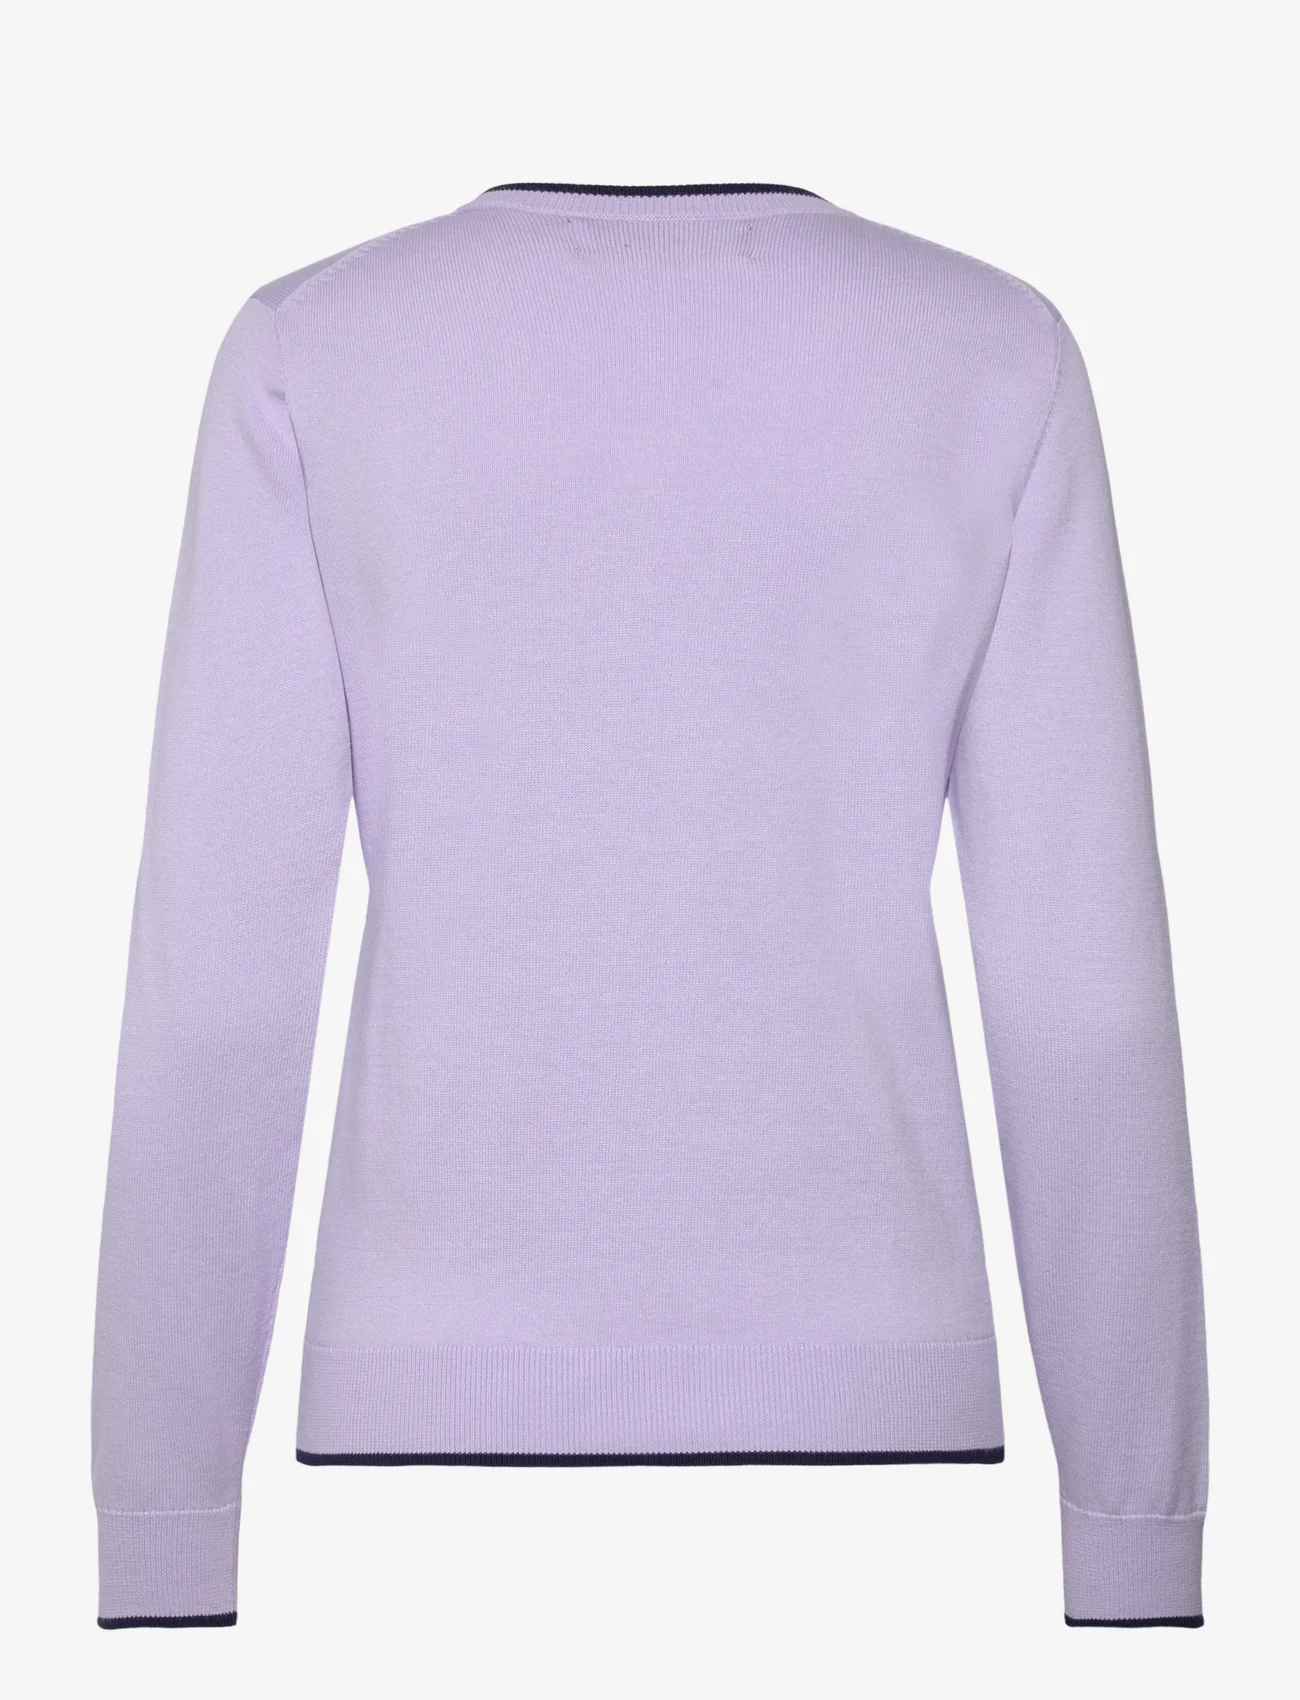 Ralph Lauren Golf - Cotton-Blend V-Neck Sweater - džemperi - flower purple - 1